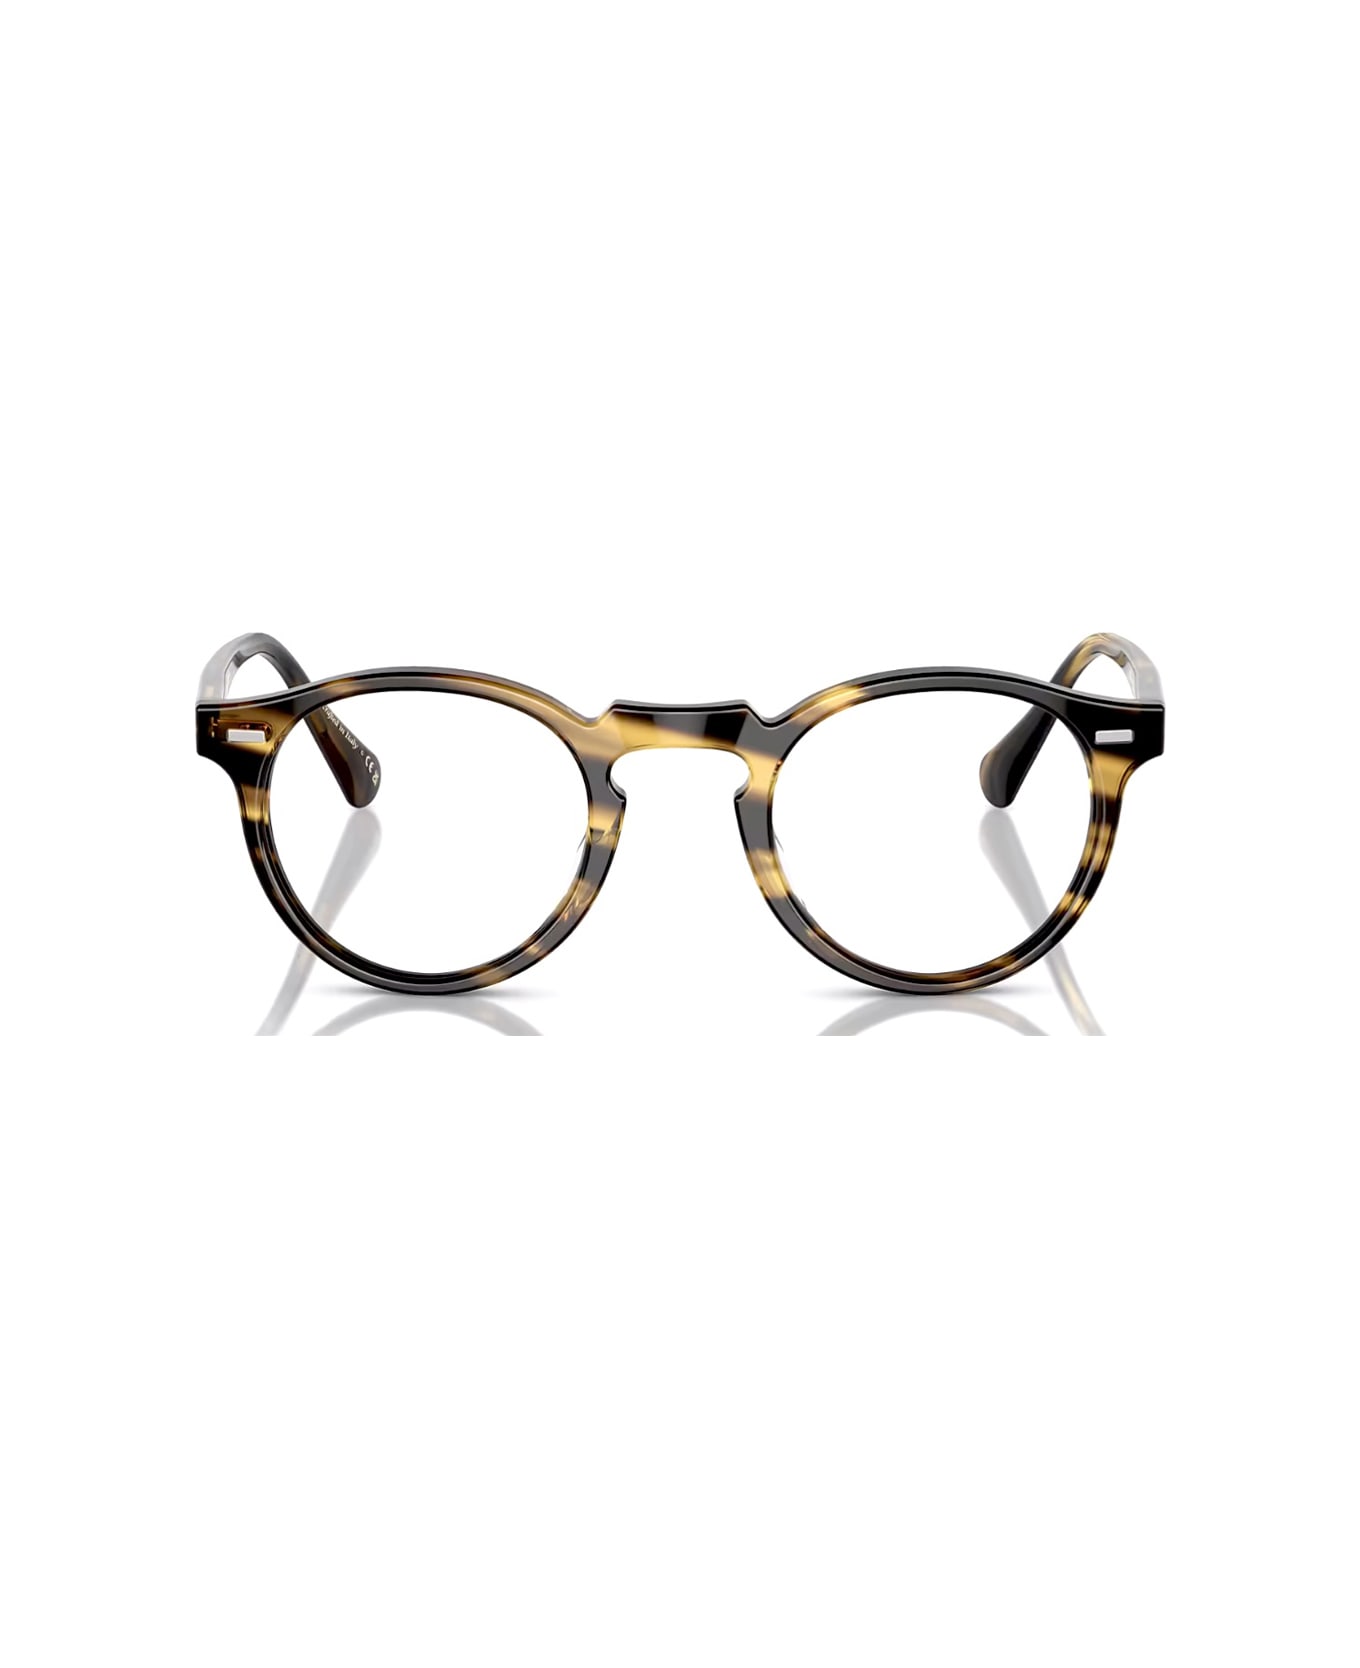 Oliver Peoples Ov5186 - Gregory Peck 1003 Glasses - Marrone